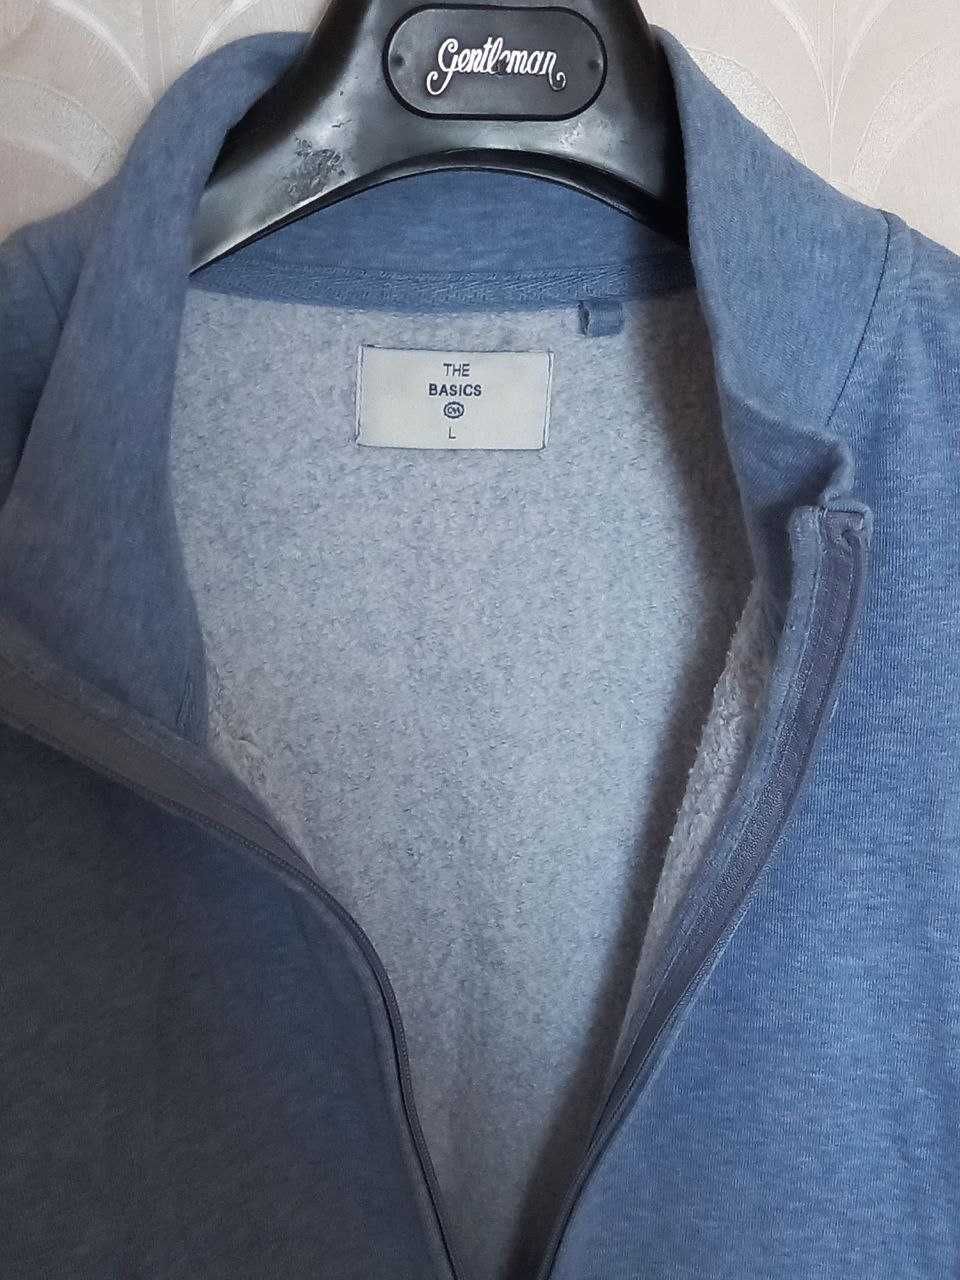 Свитер пуловер кофта джемпер водолазка синяя хлопок XL 52 размер